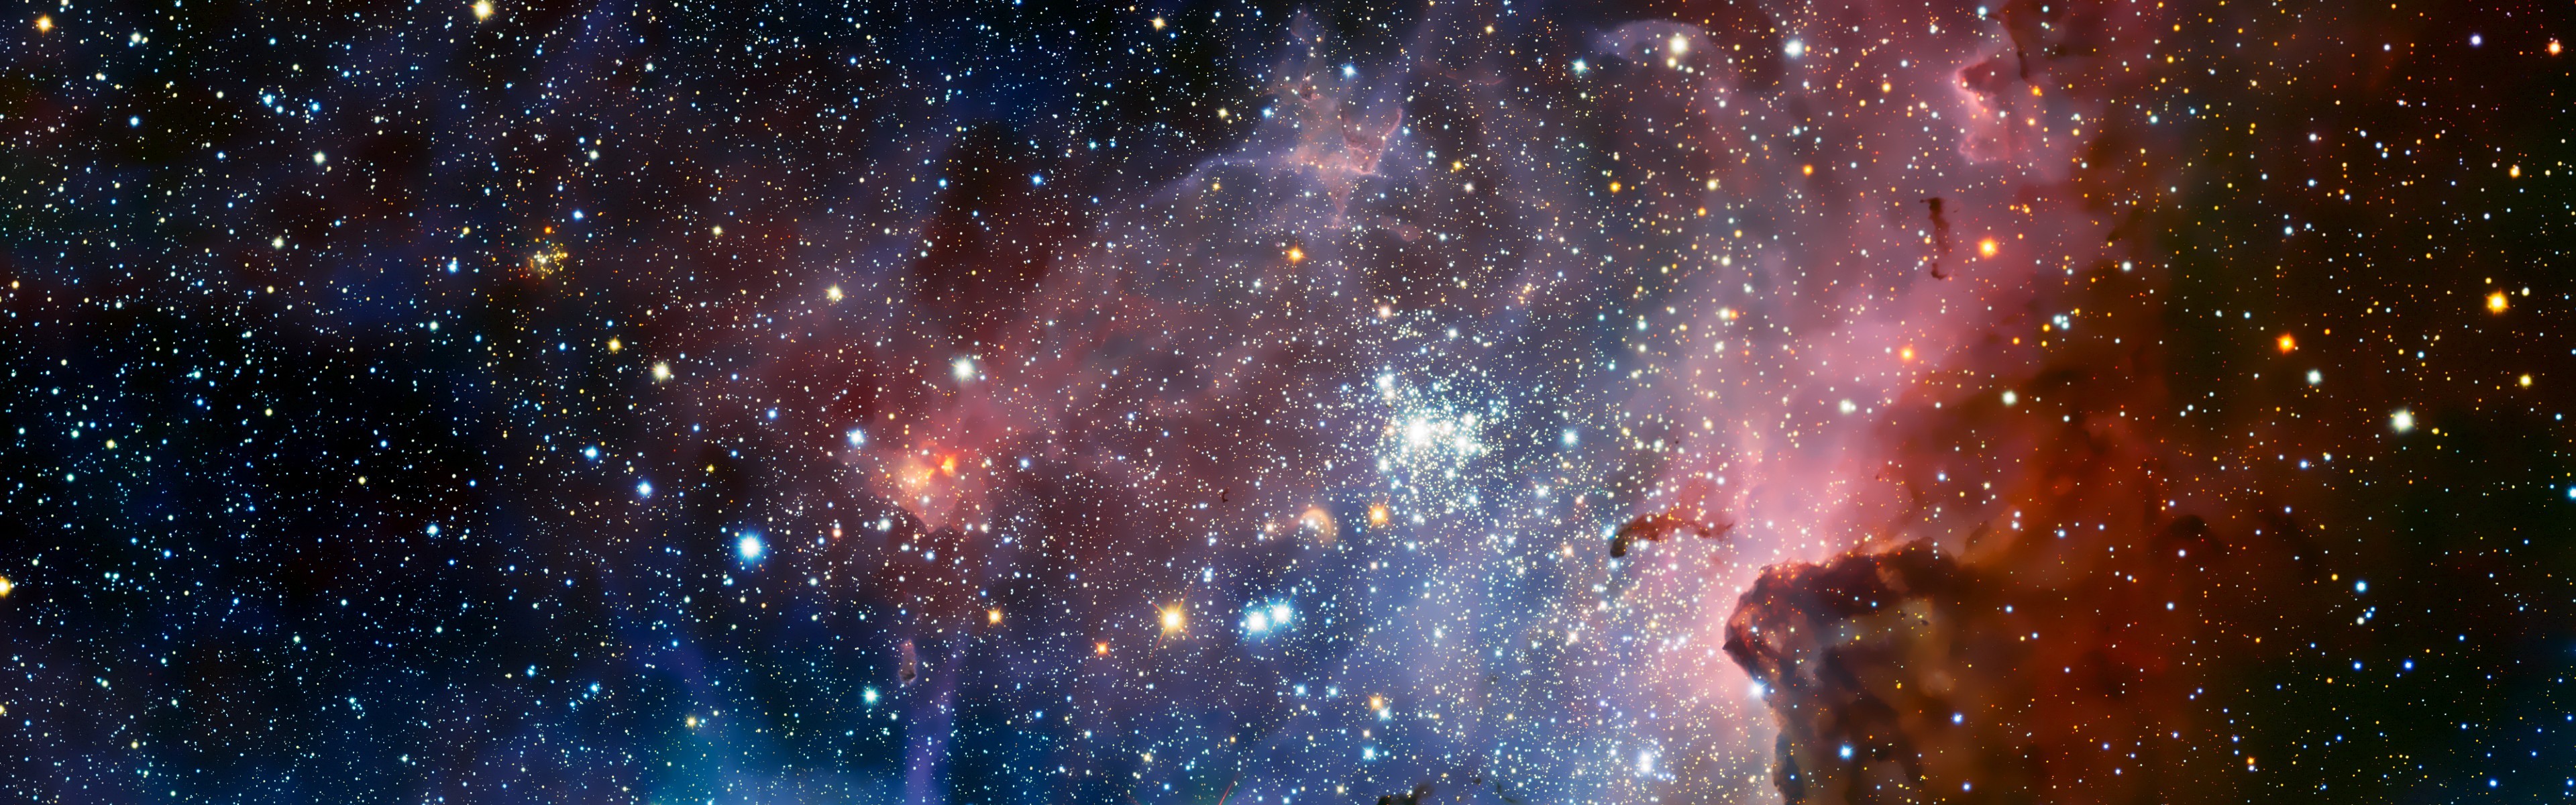 General 3840x1200 space multiple display nebula space art colorful stars digital art Carina Nebula ALMA Observatory